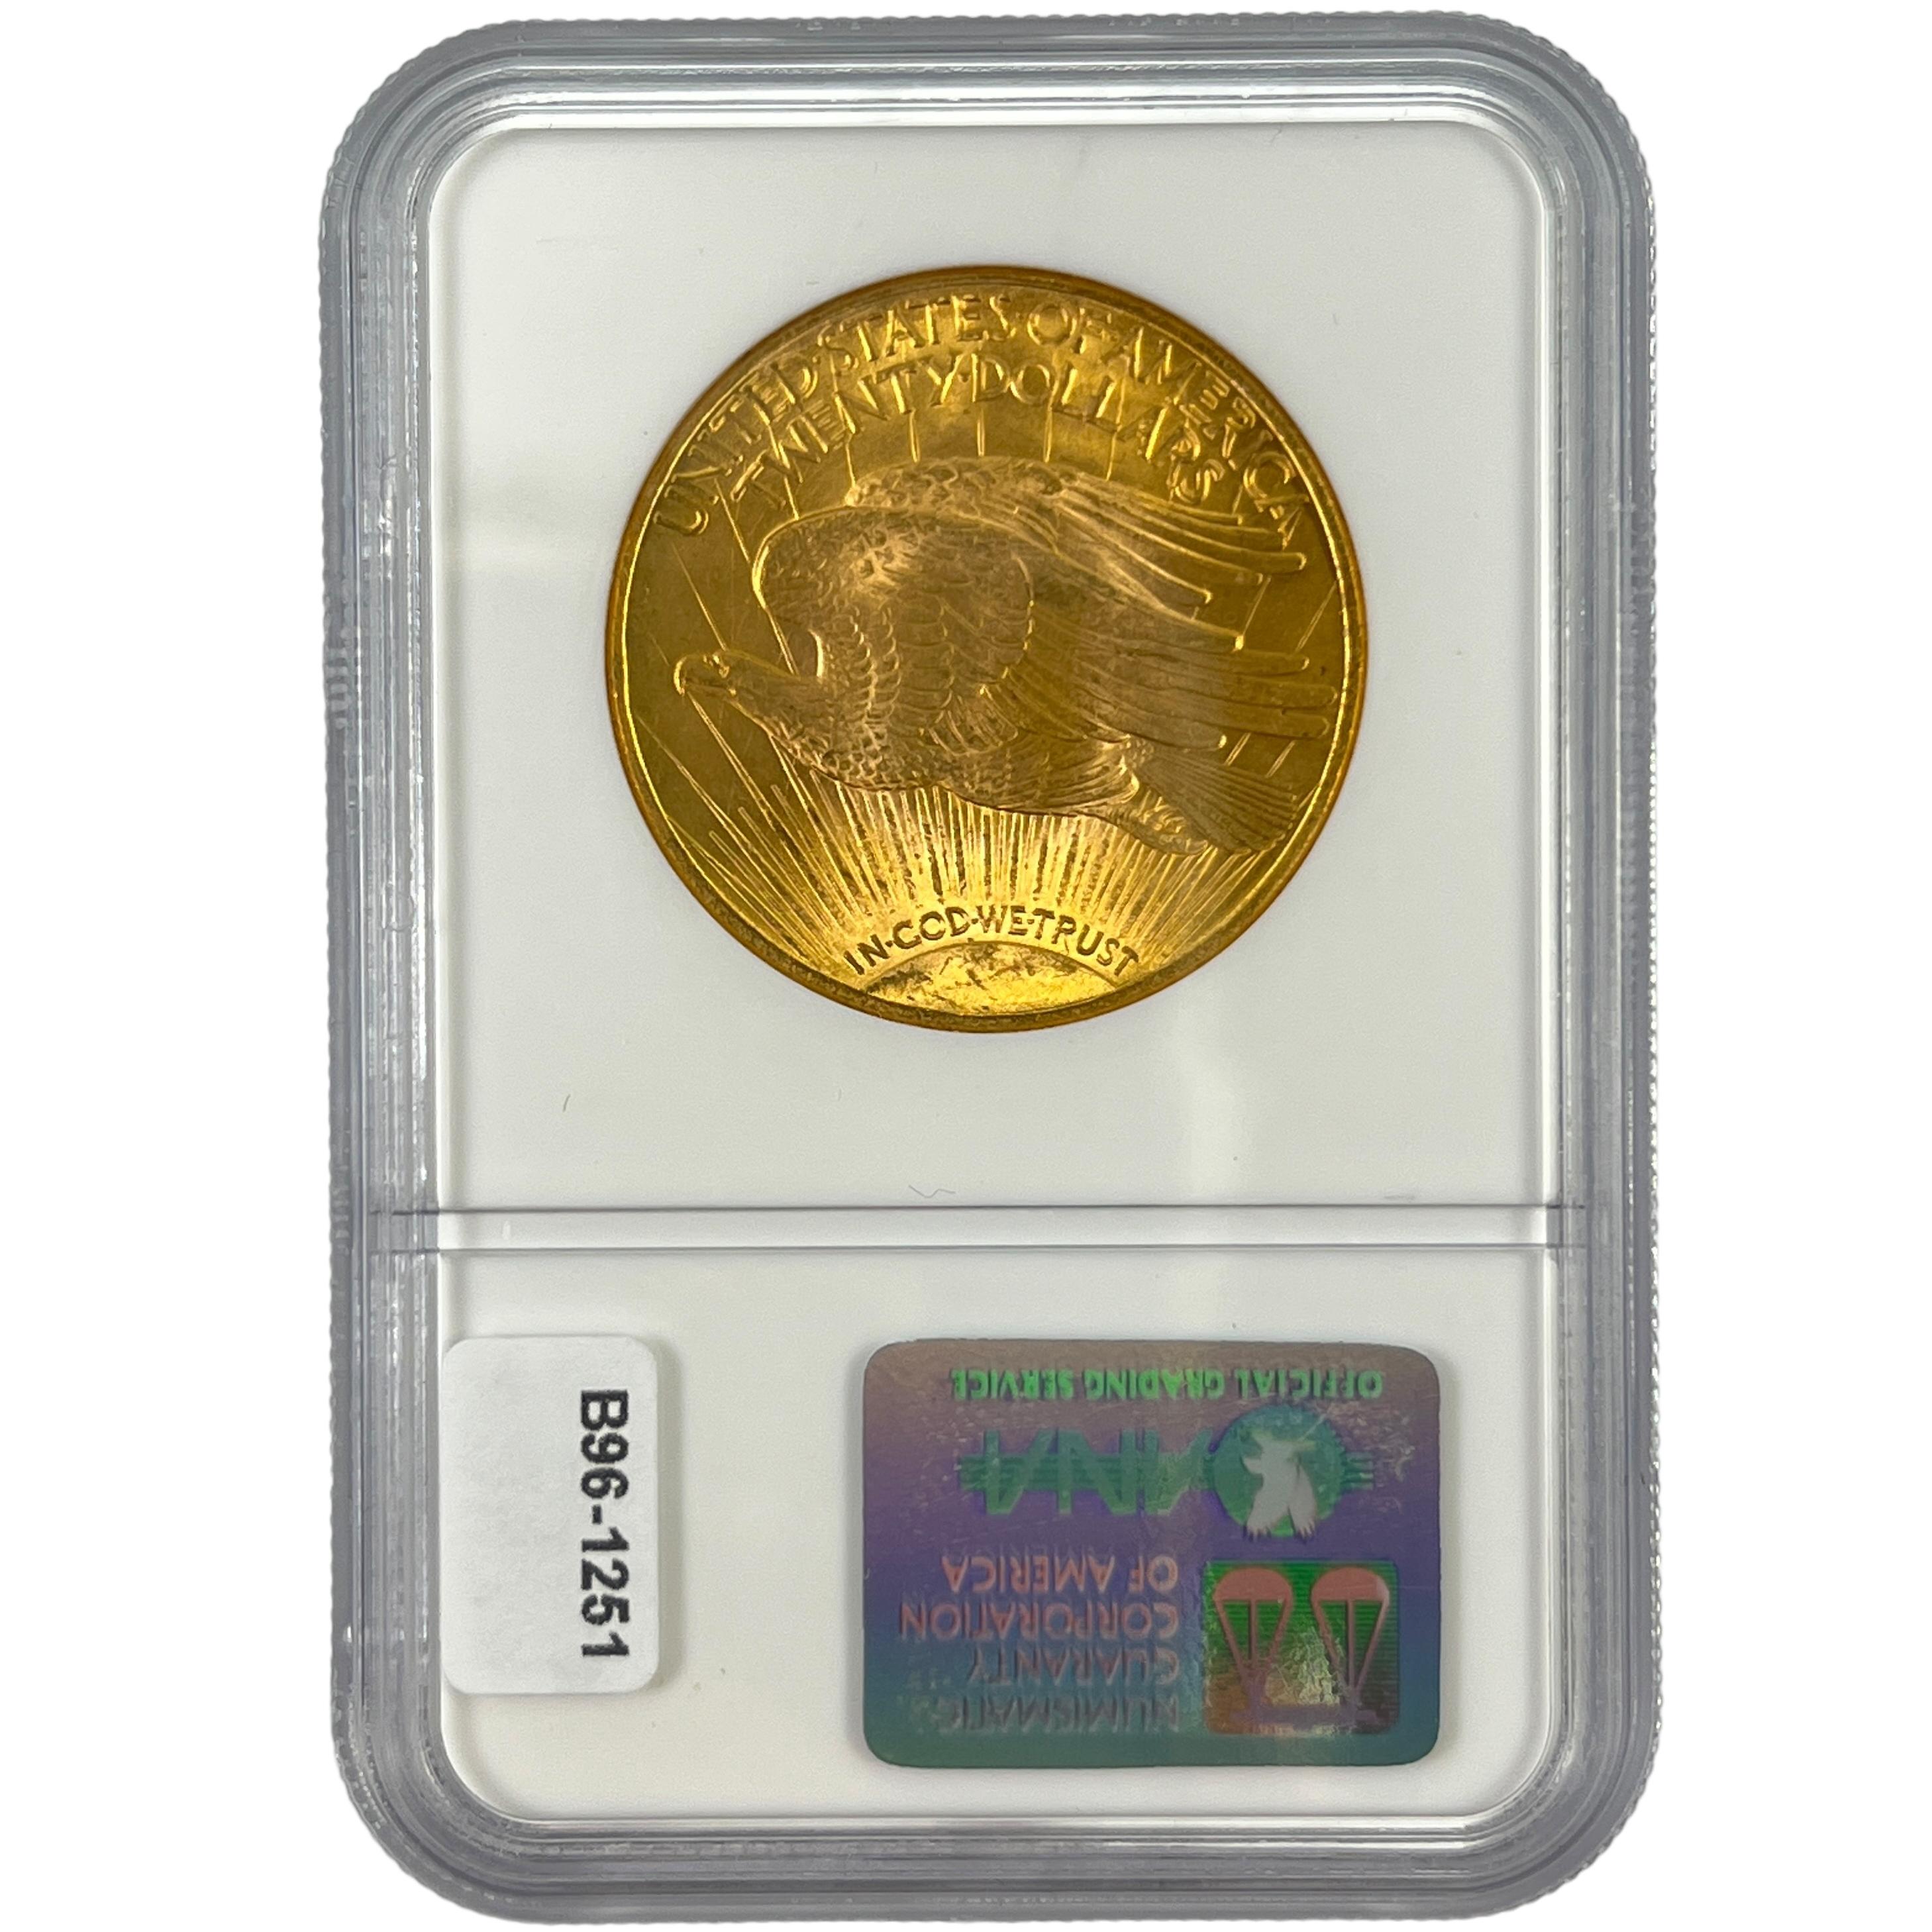 Certified 1924 U.S. $20 St. Gaudens $20 gold coin